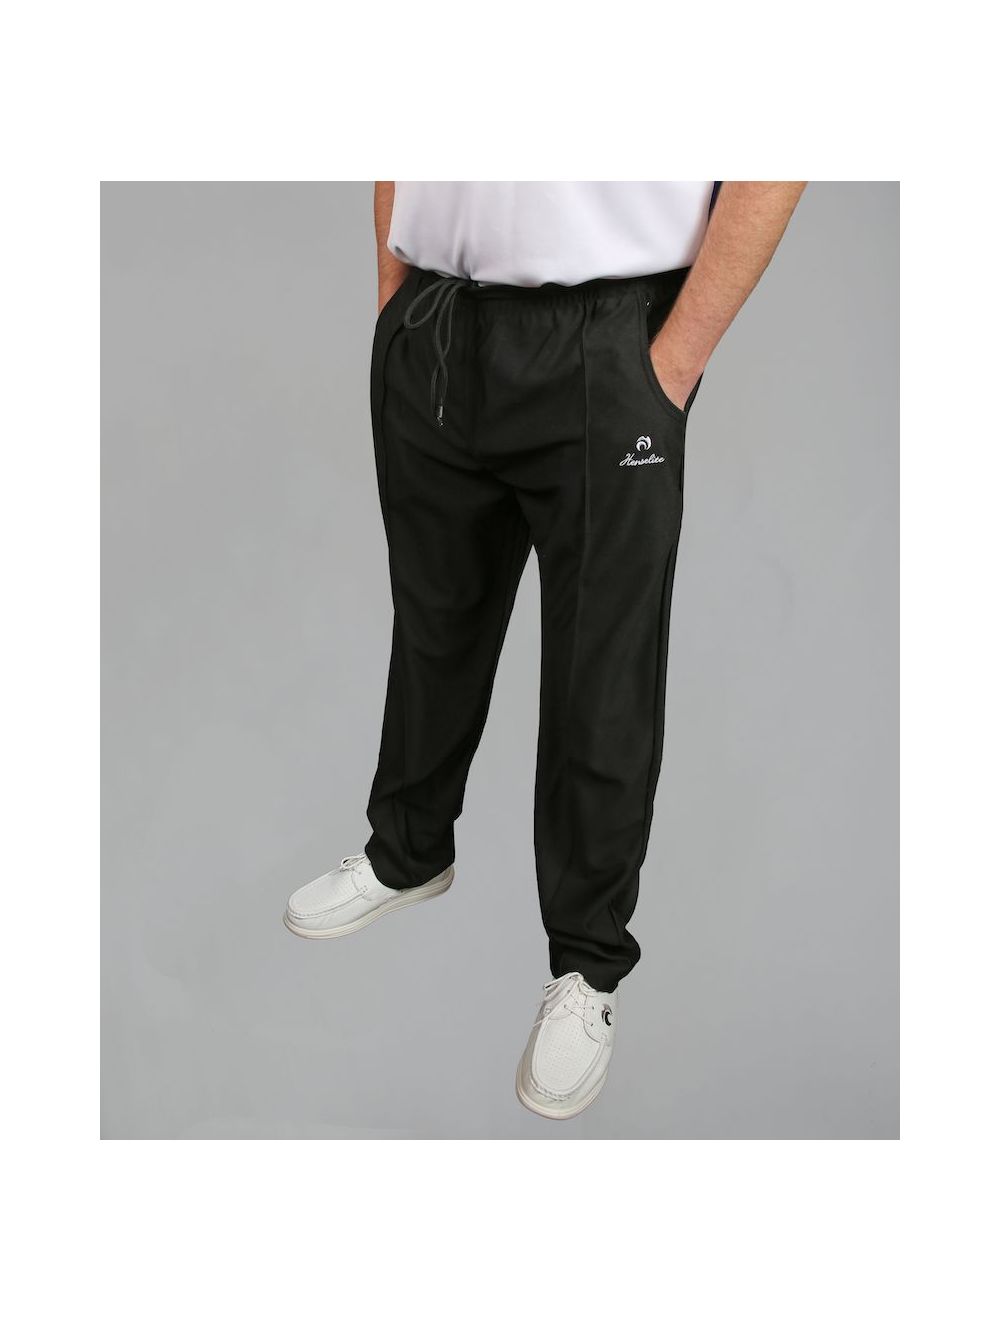 PANTS CUFF CORE Sports trousers  Men  Diadora Online Store IN